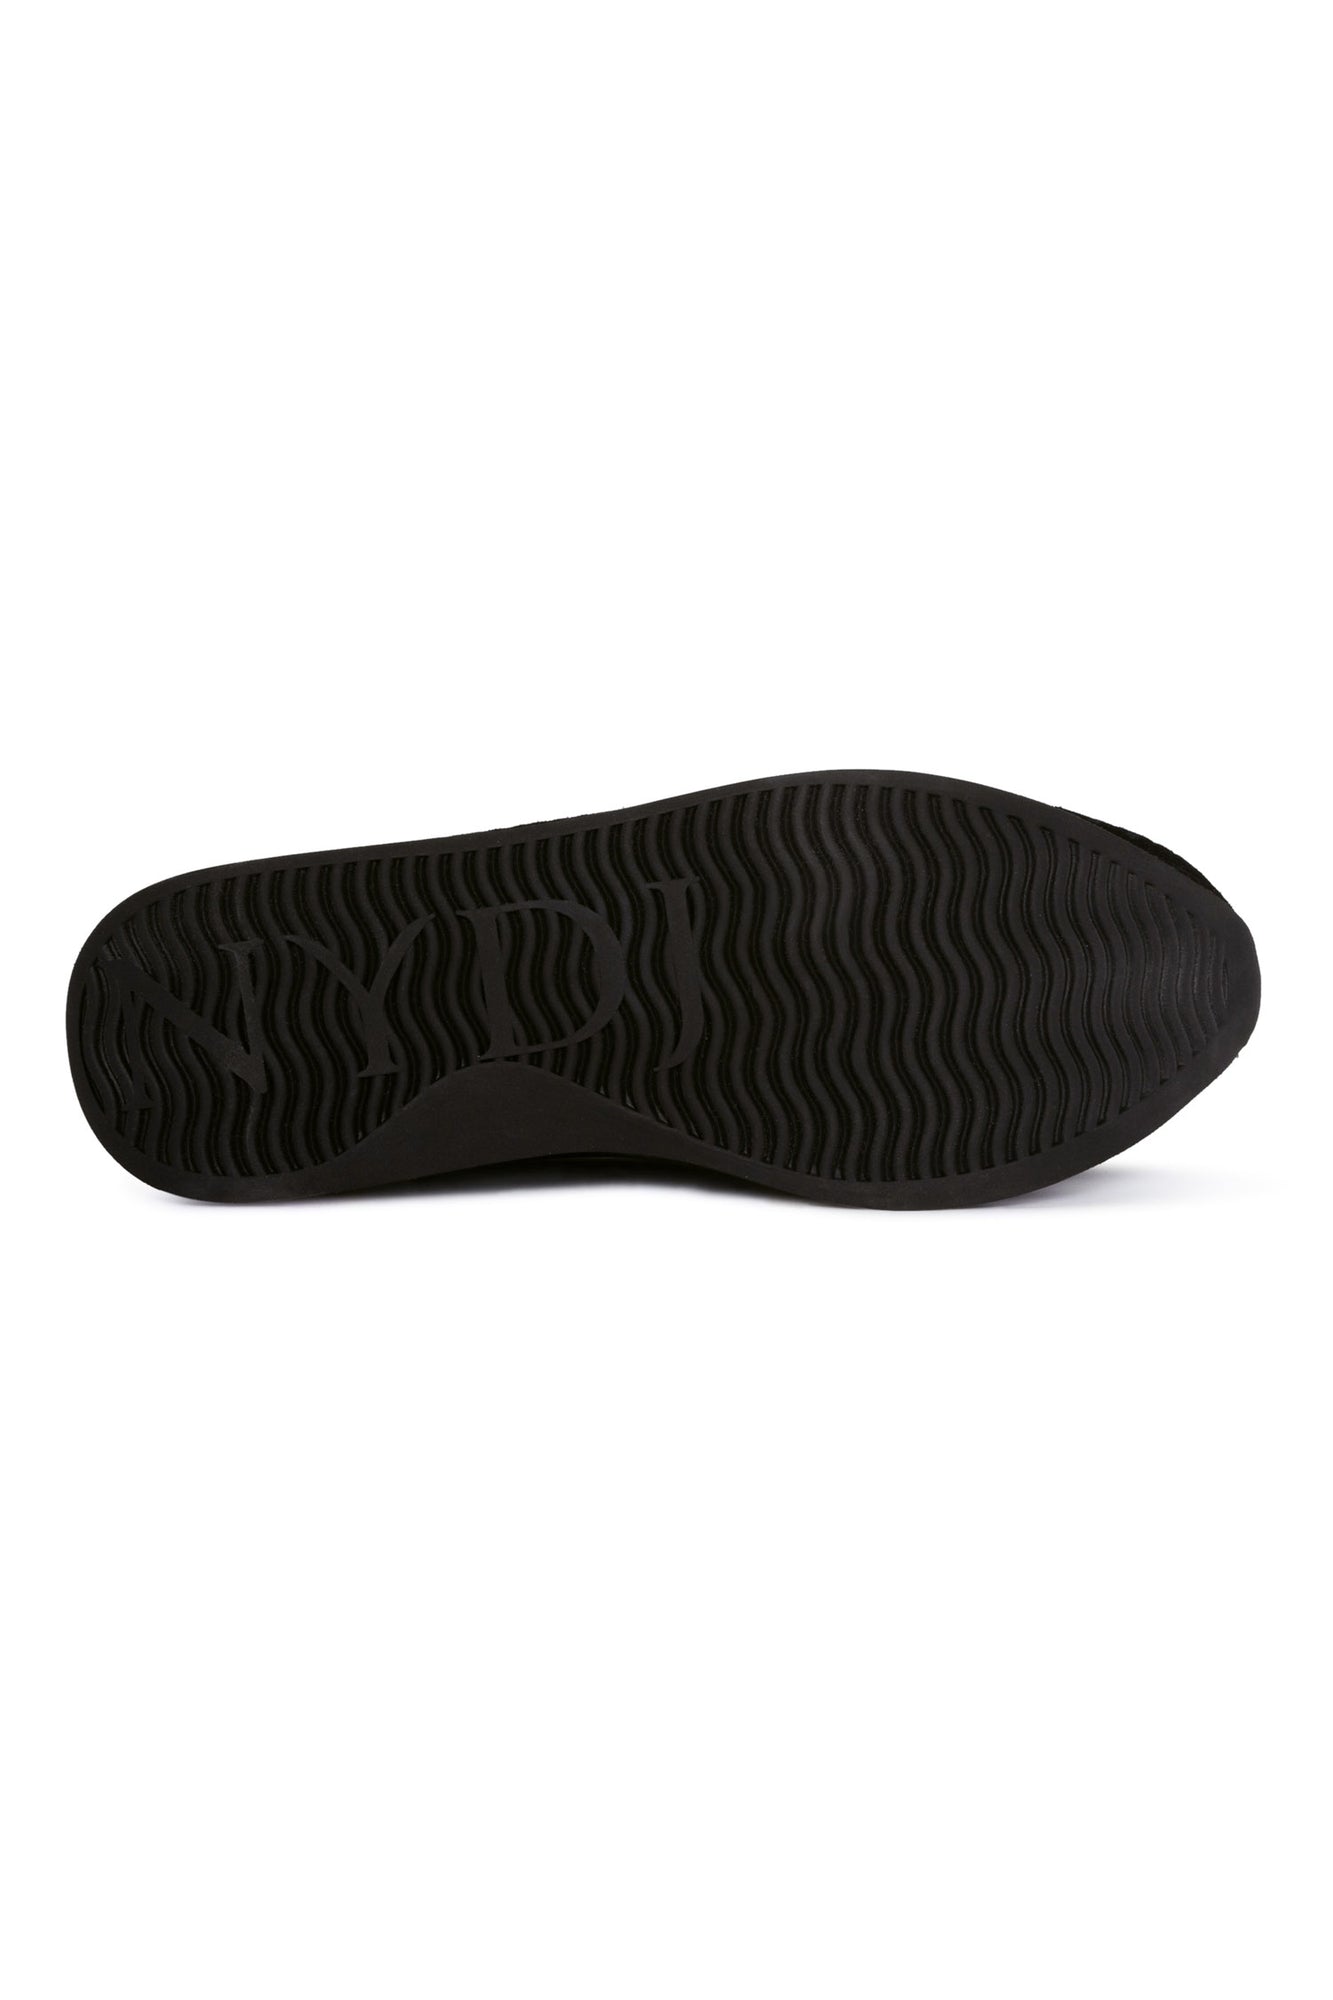 NYDJ Fern Platform Loafers In Suede - Black